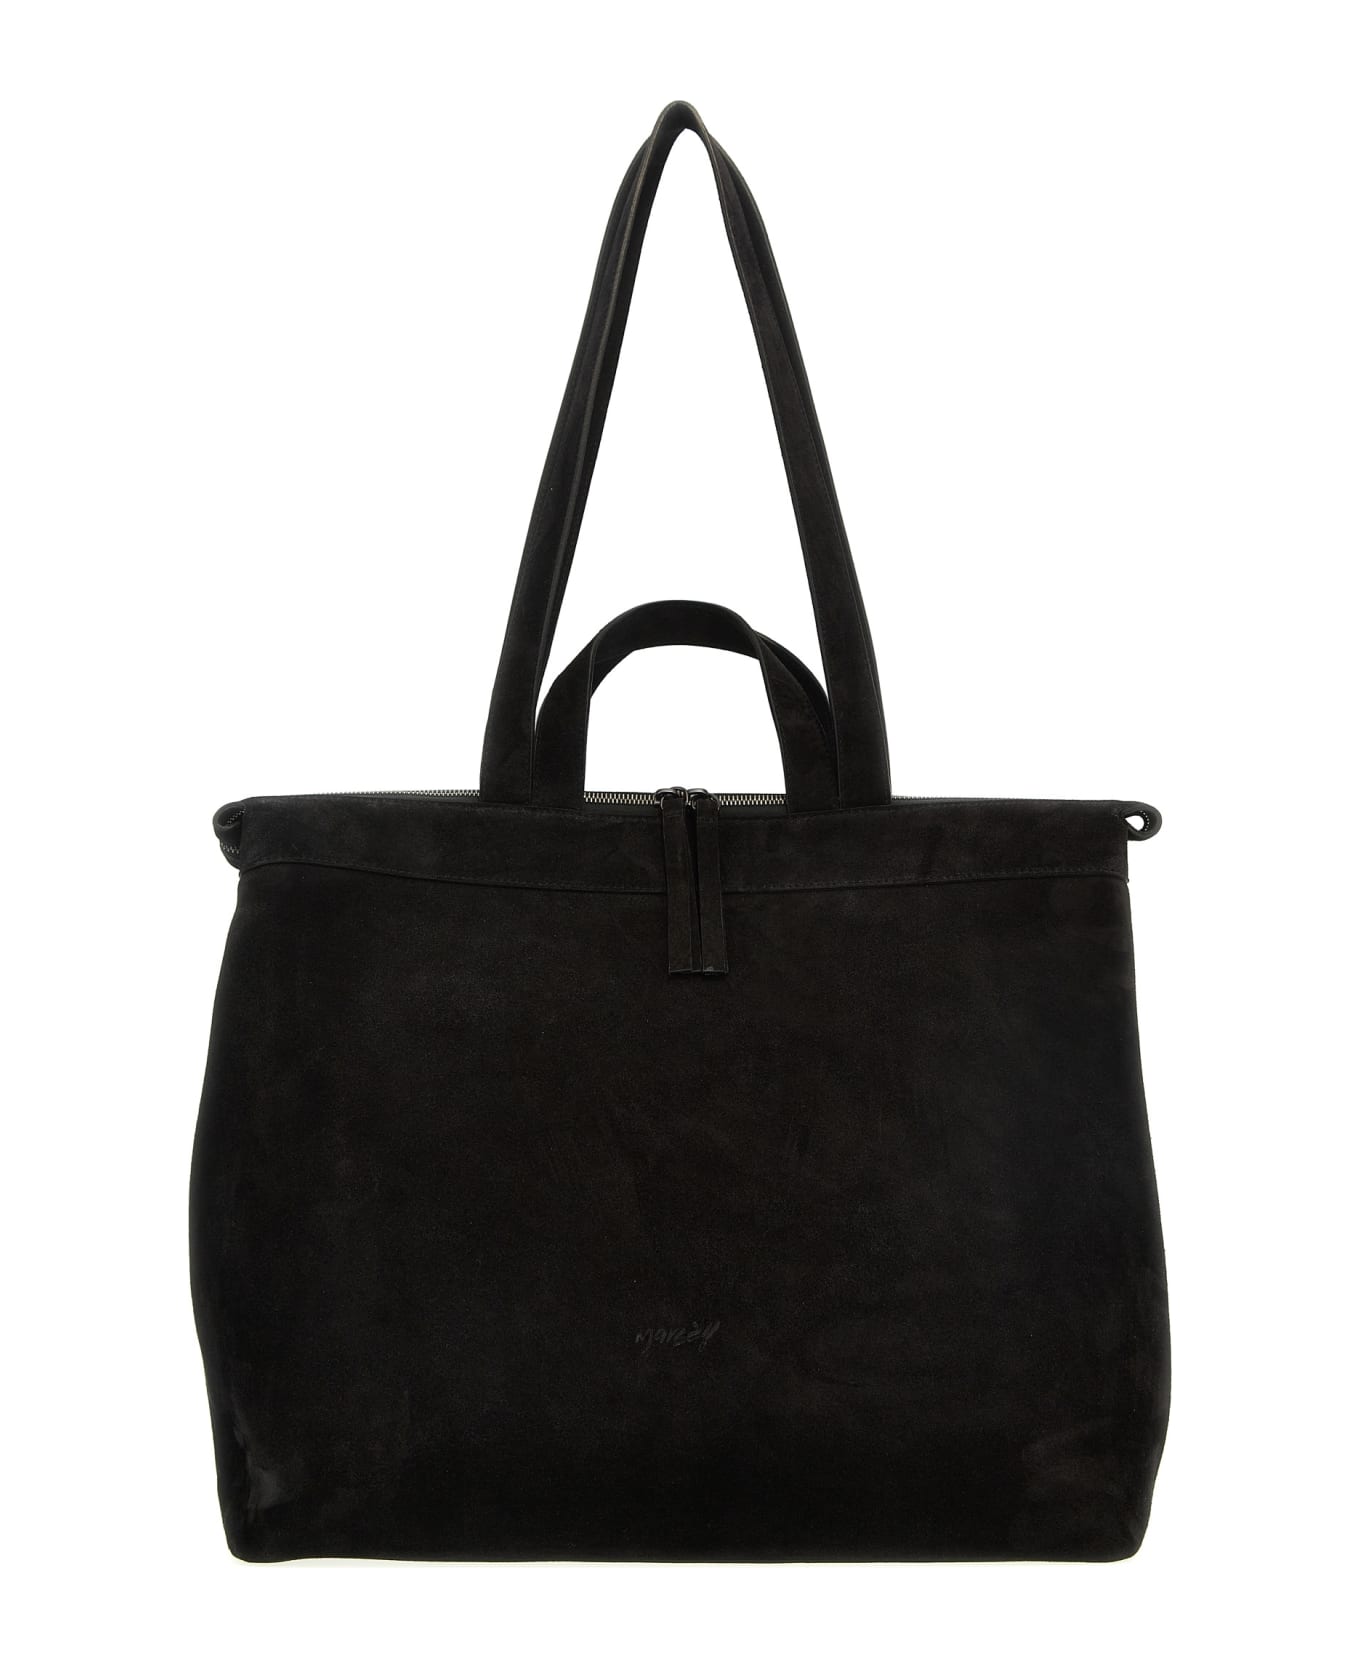 Marsell 'borso' Shopping Bag - Black  